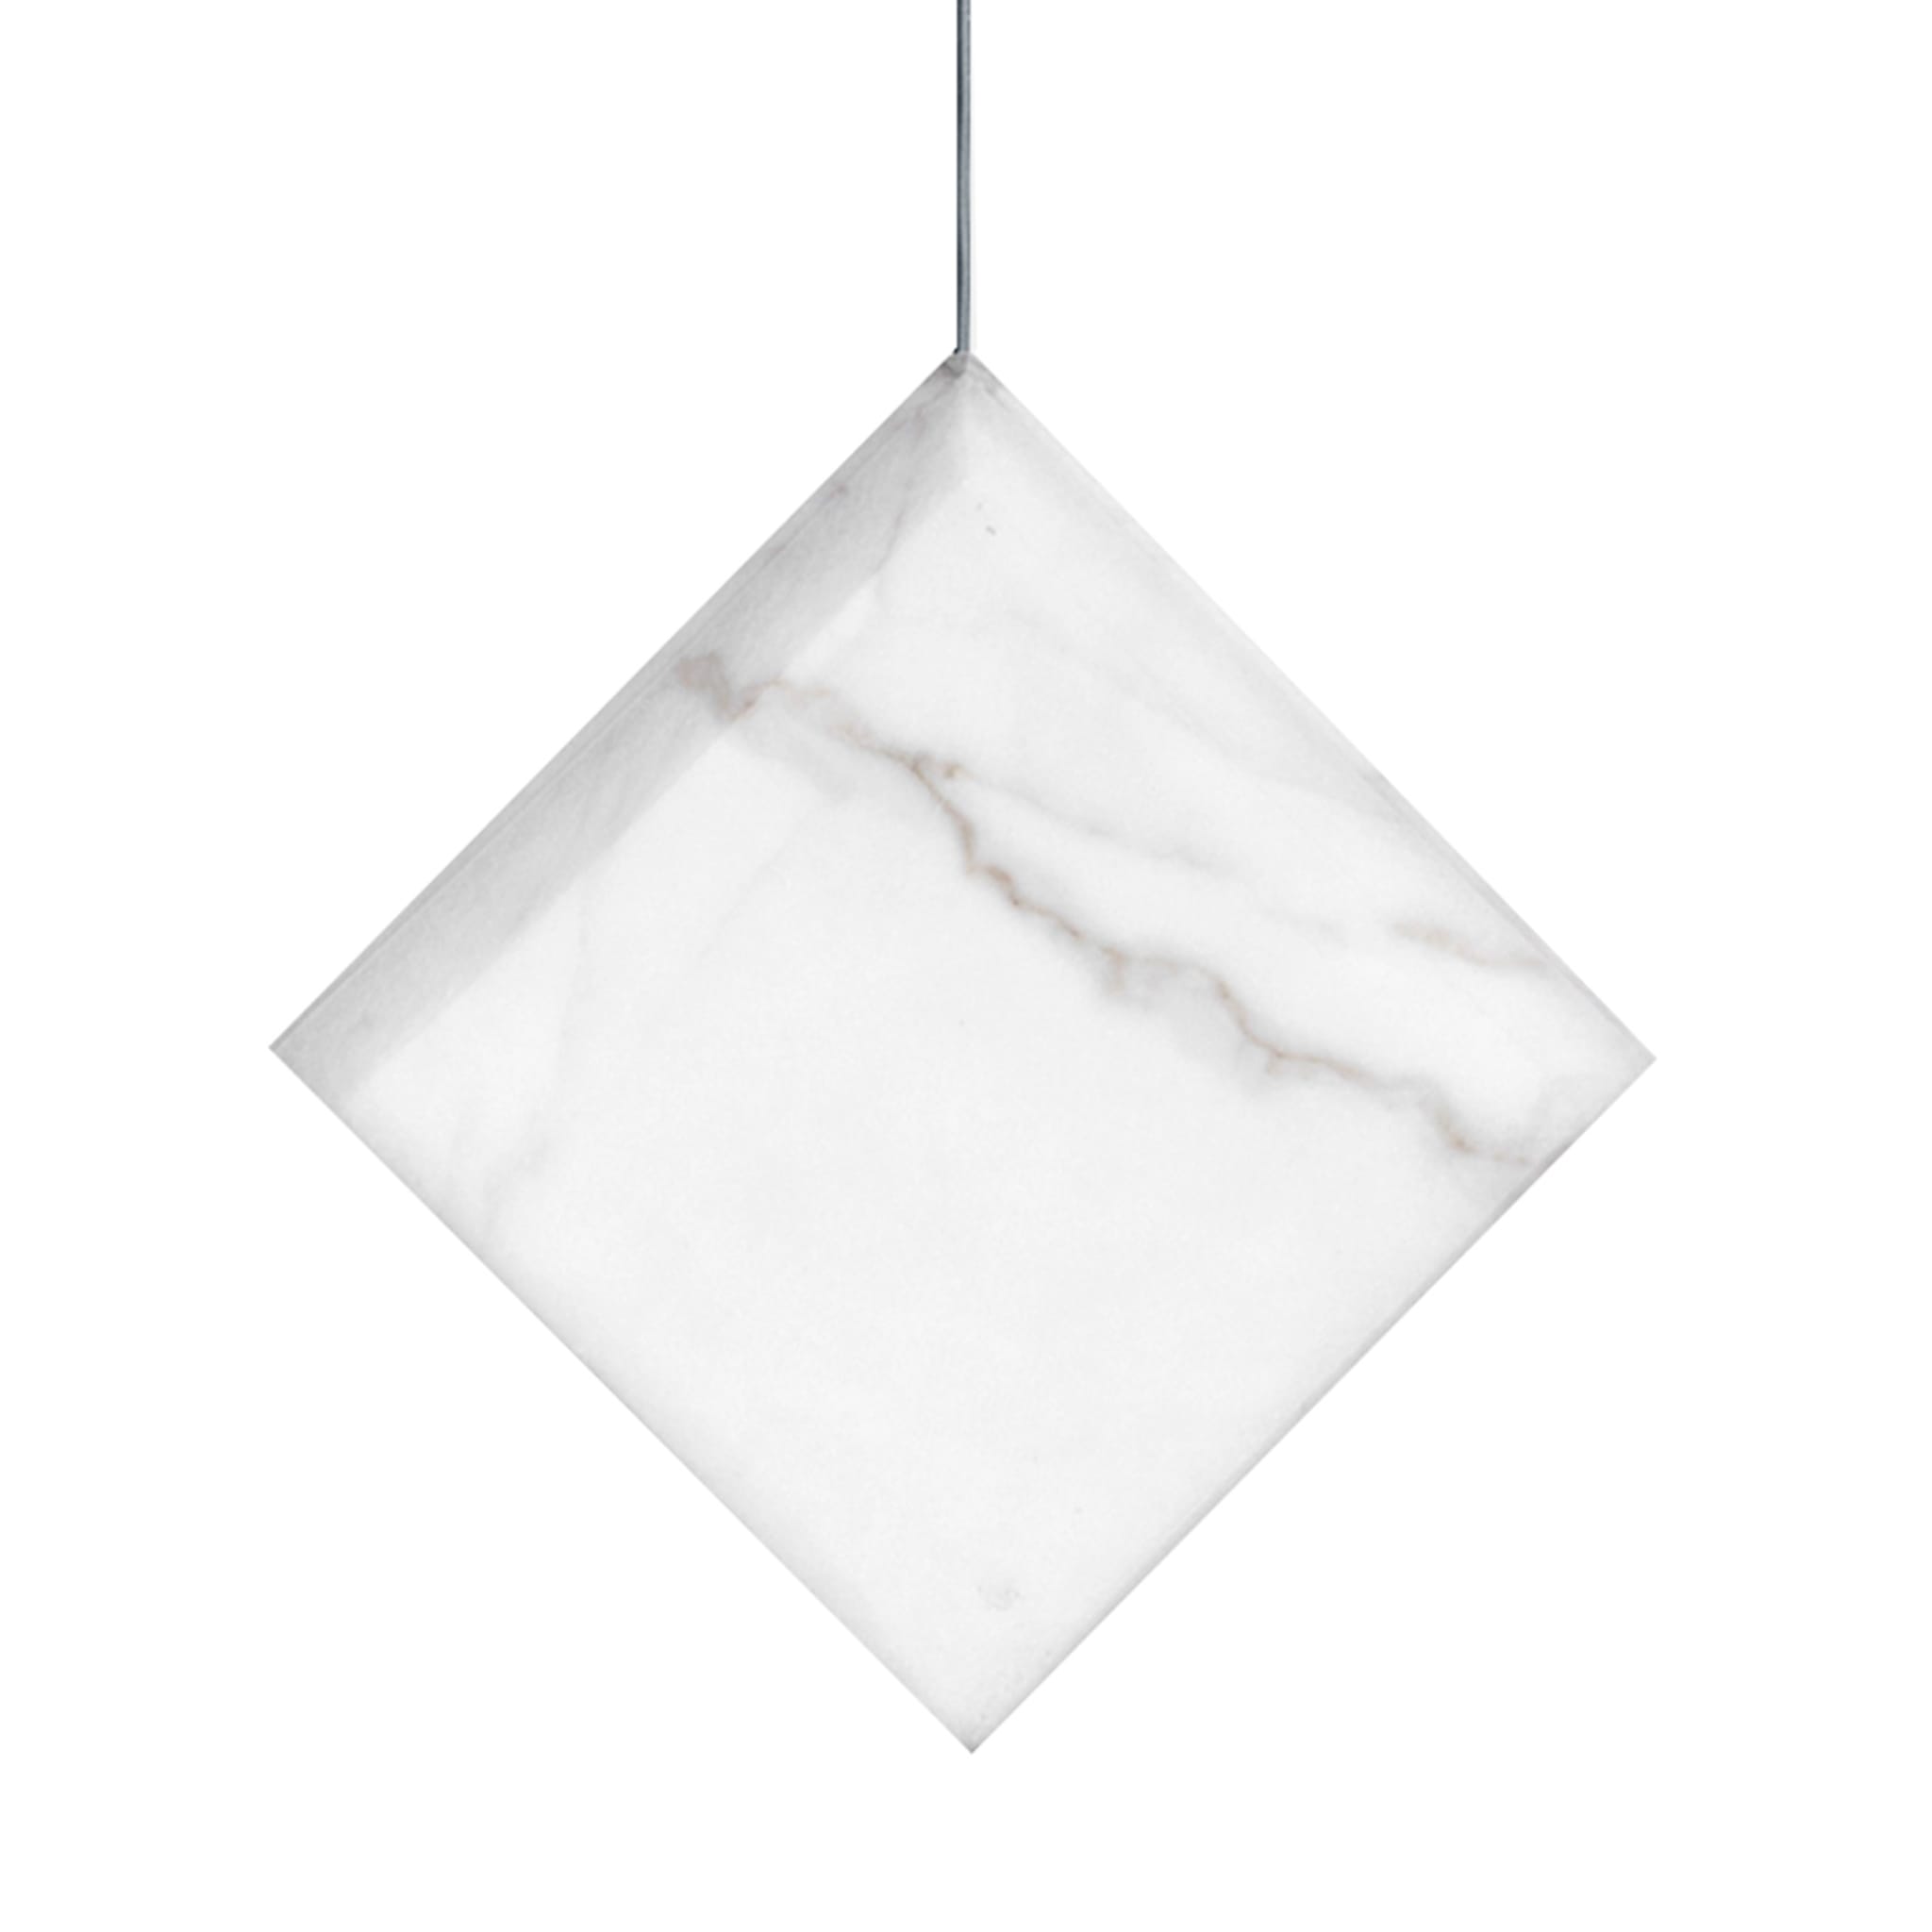 Werner Jr. Carrara Marble Pendant lamp #2 - Alternative view 1